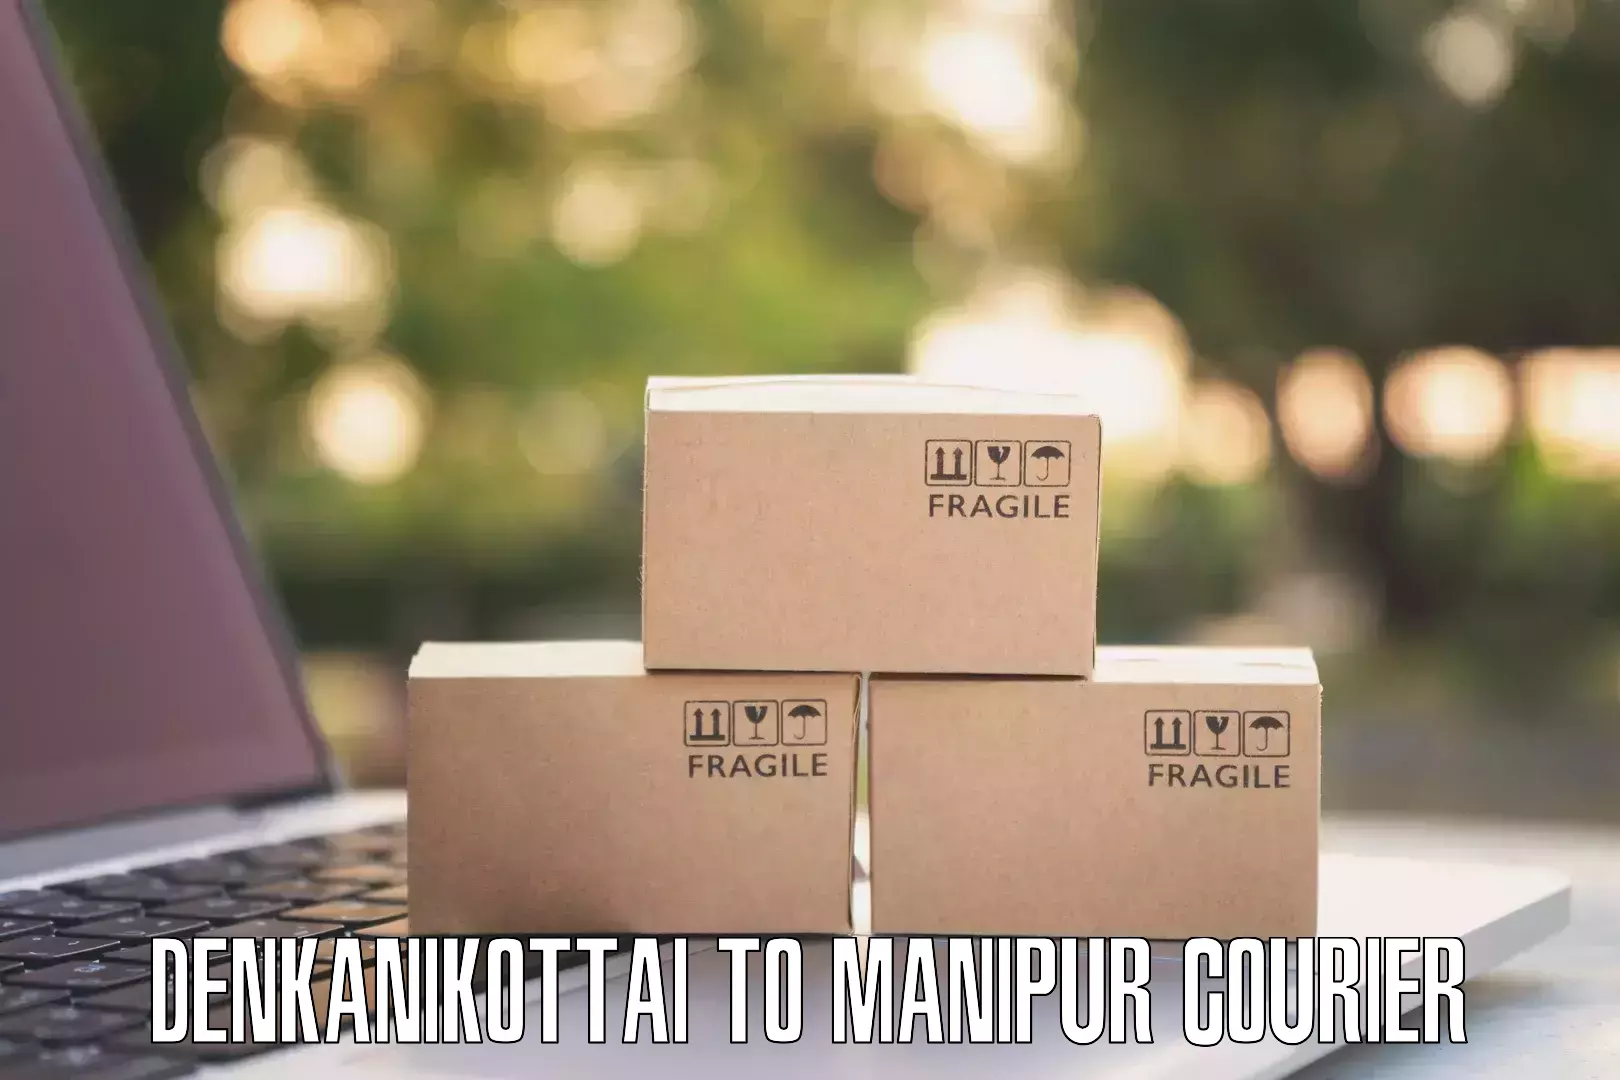 Package consolidation in Denkanikottai to Manipur